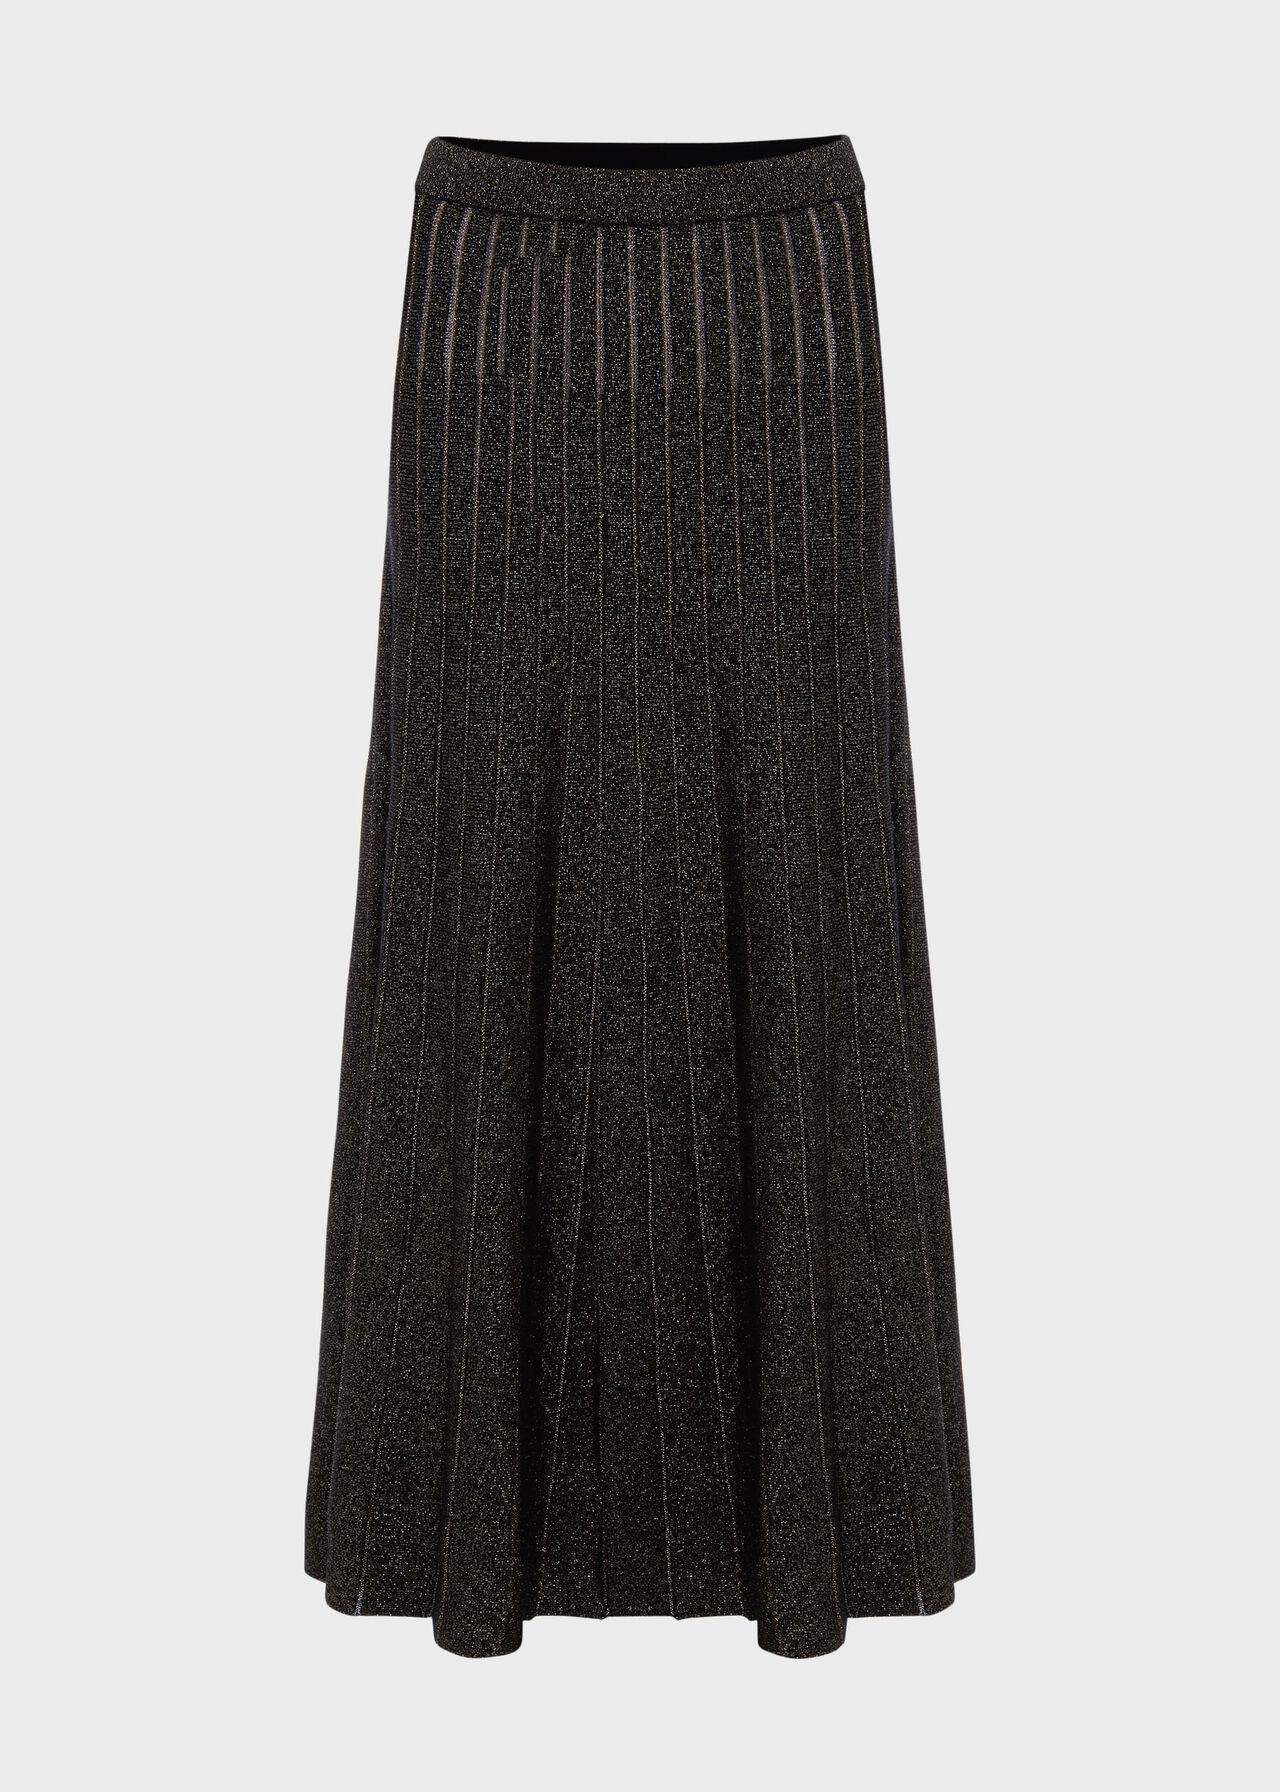 Ira Knitted Skirt, Black Gold, hi-res